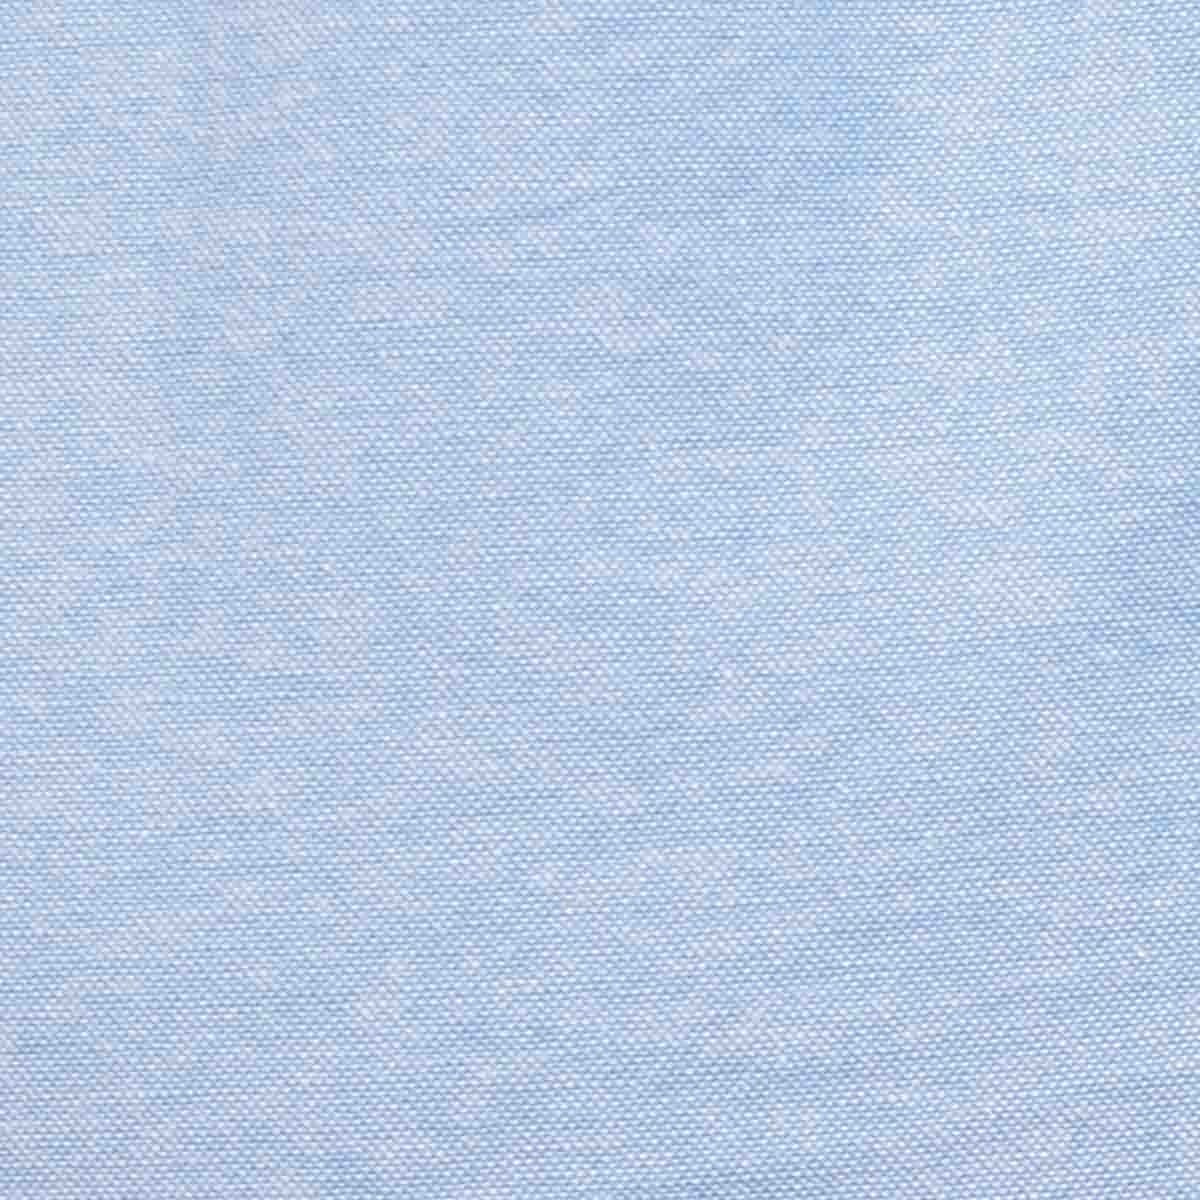 Camisa Manga Larga Azul Fukka Plus para Caballero